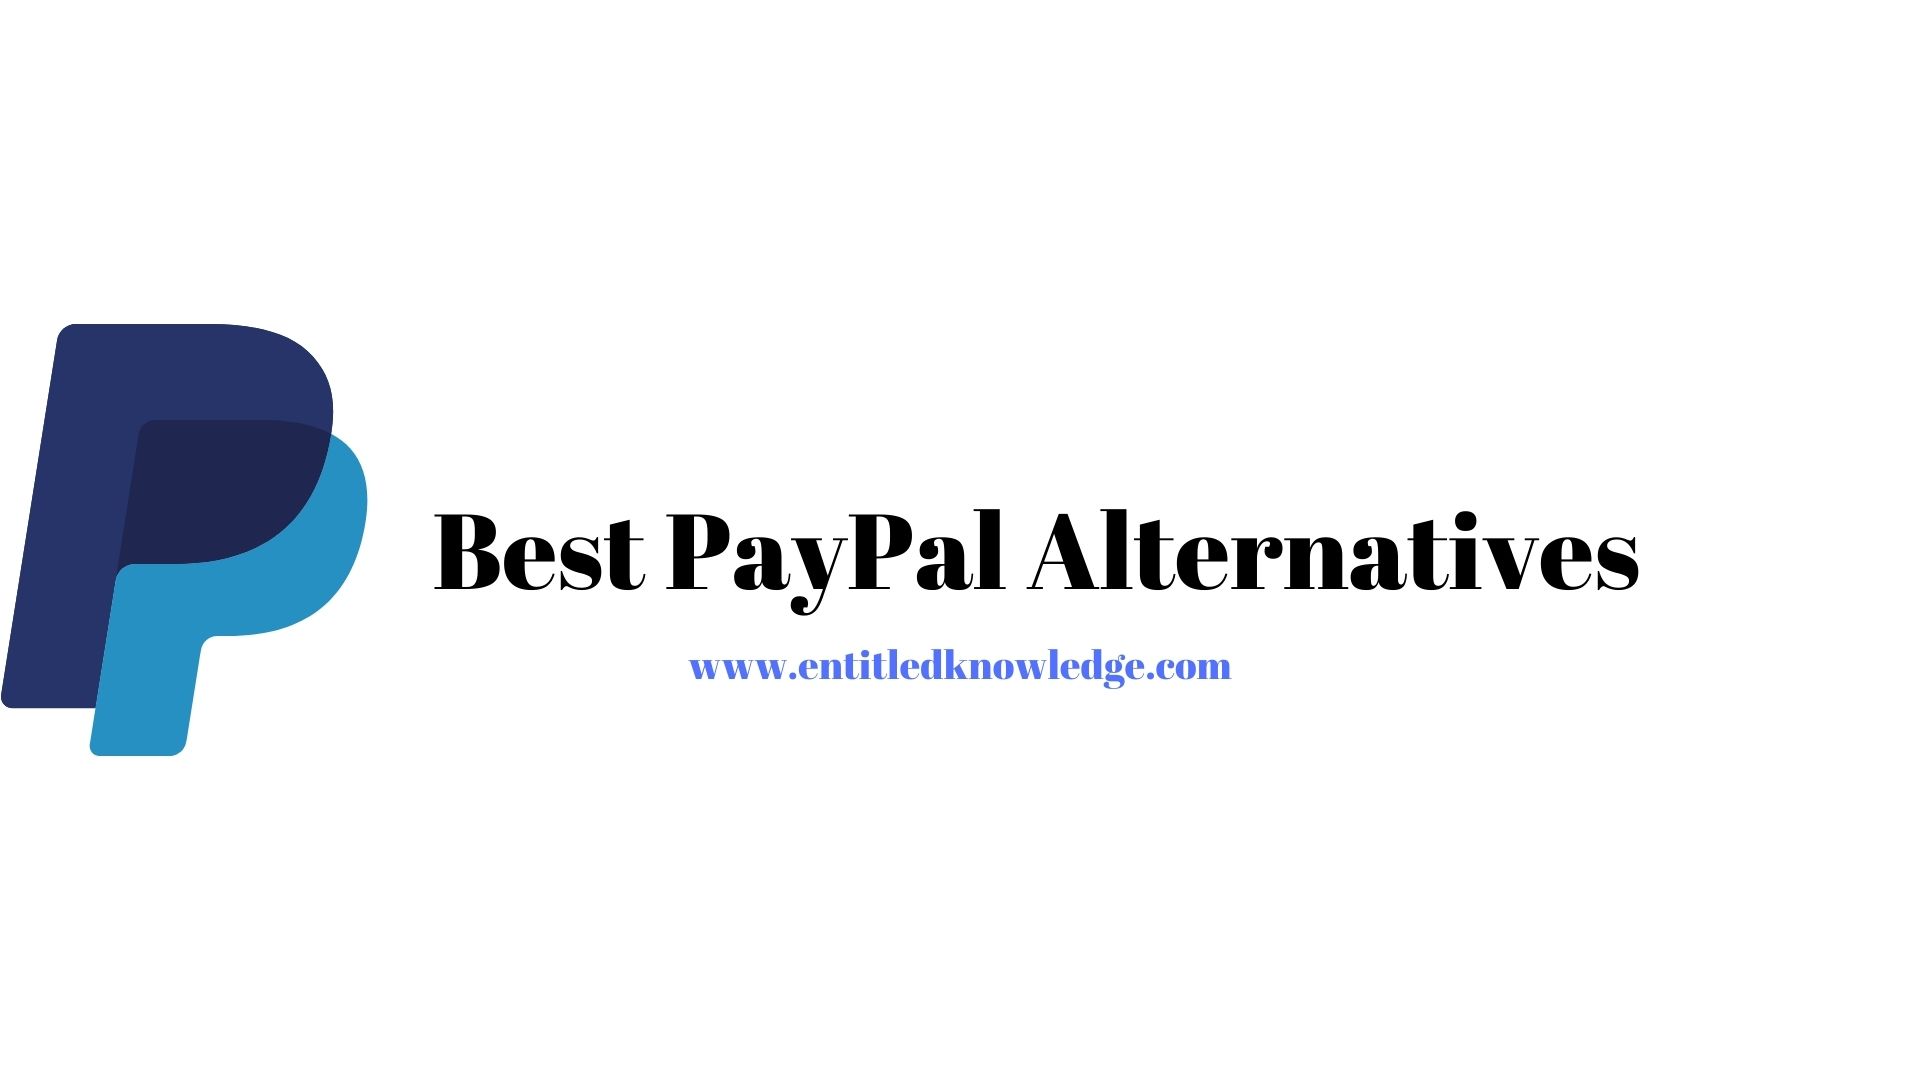 Top Best PayPal Alternatives